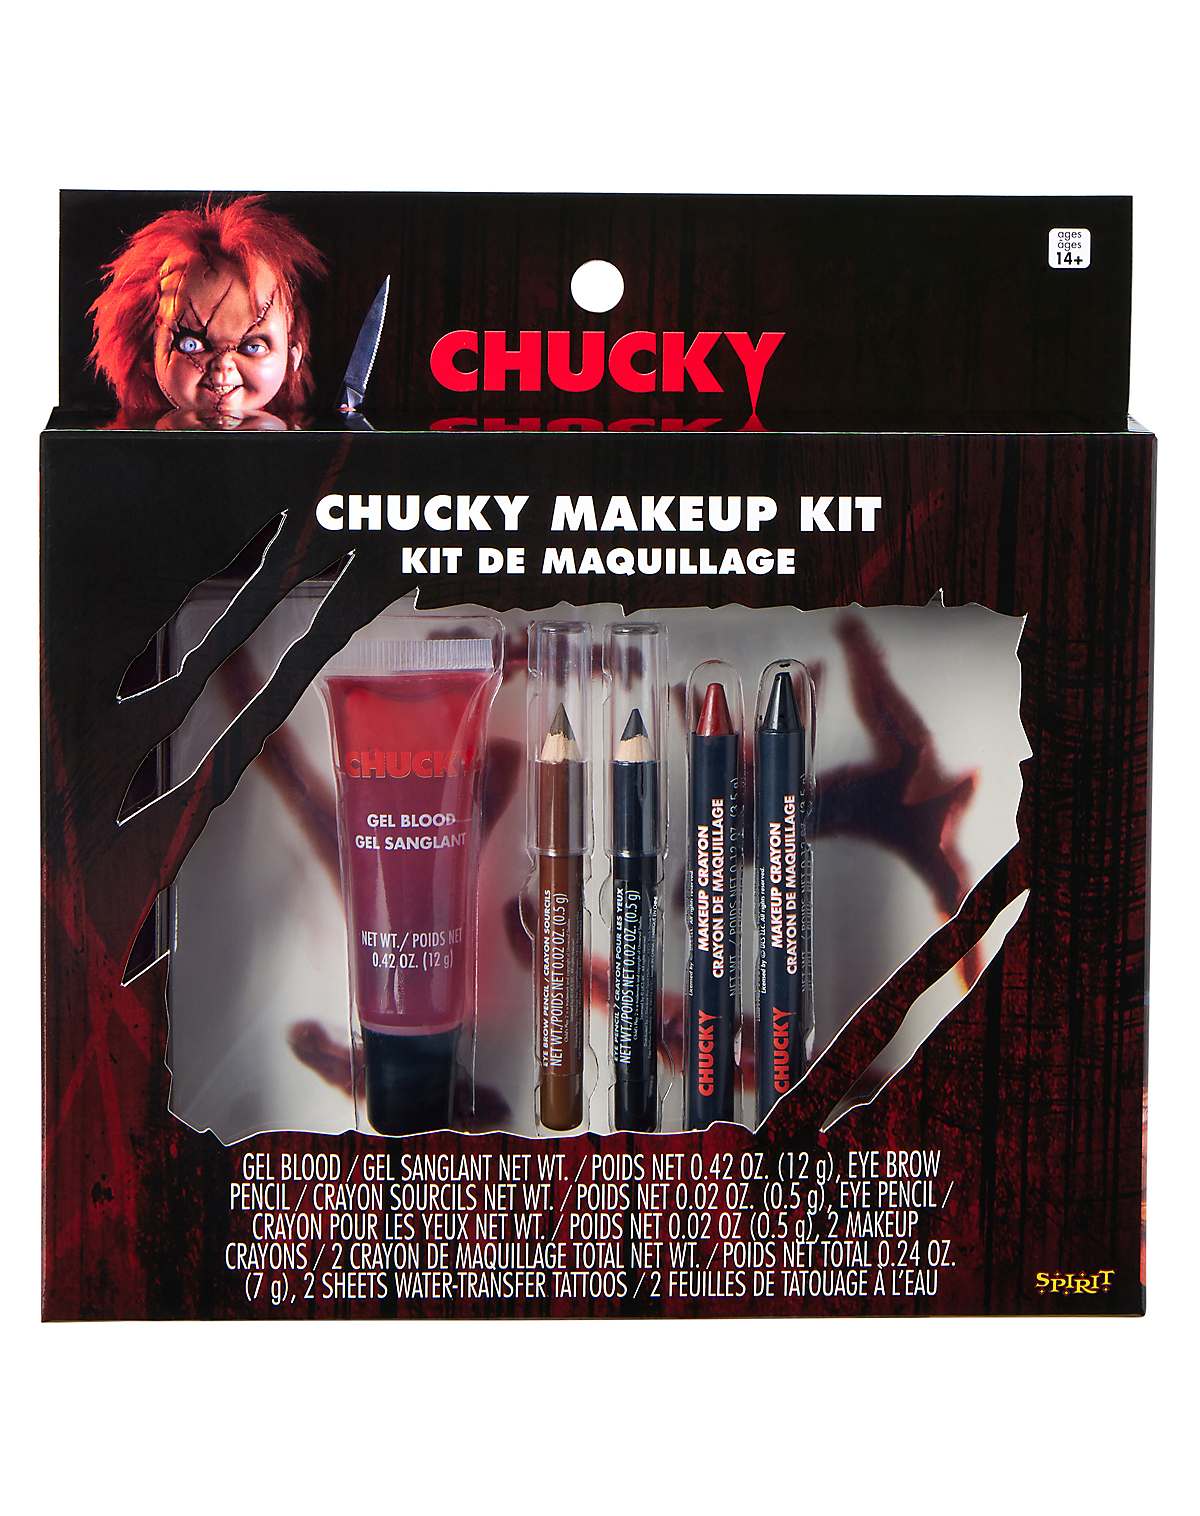 Chucky makeup